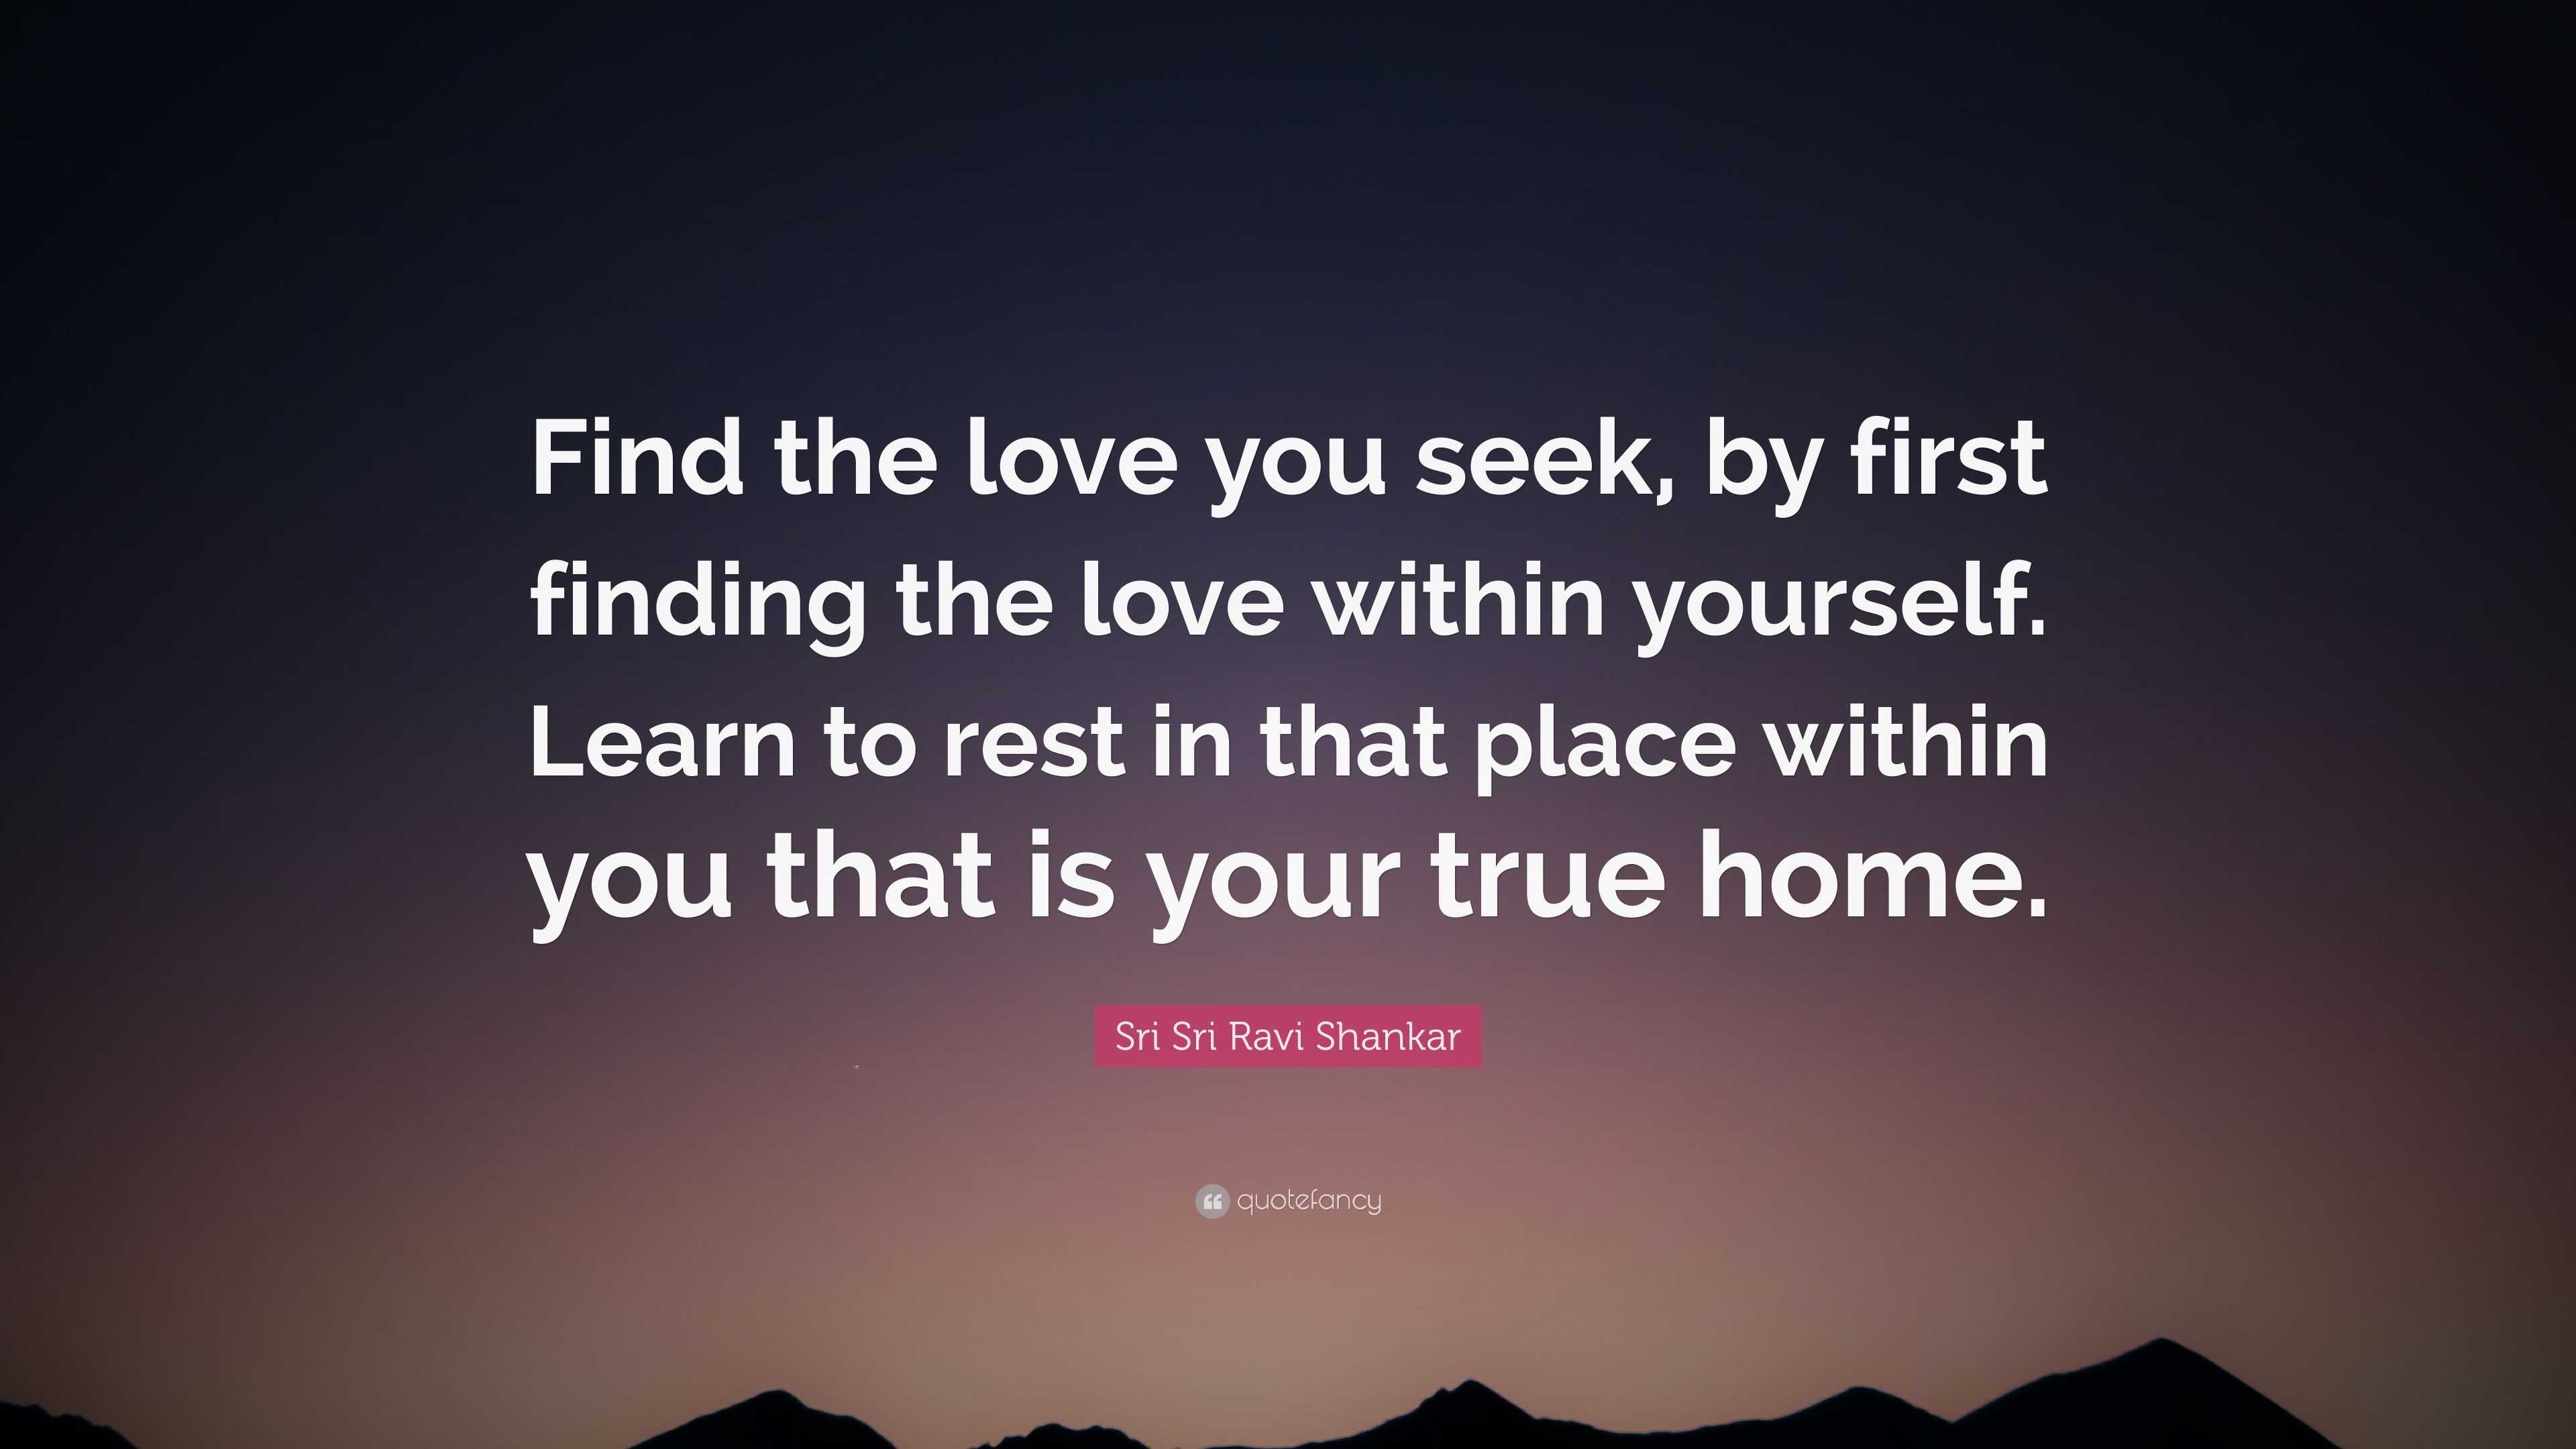 Sri Sri Ravi Shankar Quote “Find the love you seek by first finding